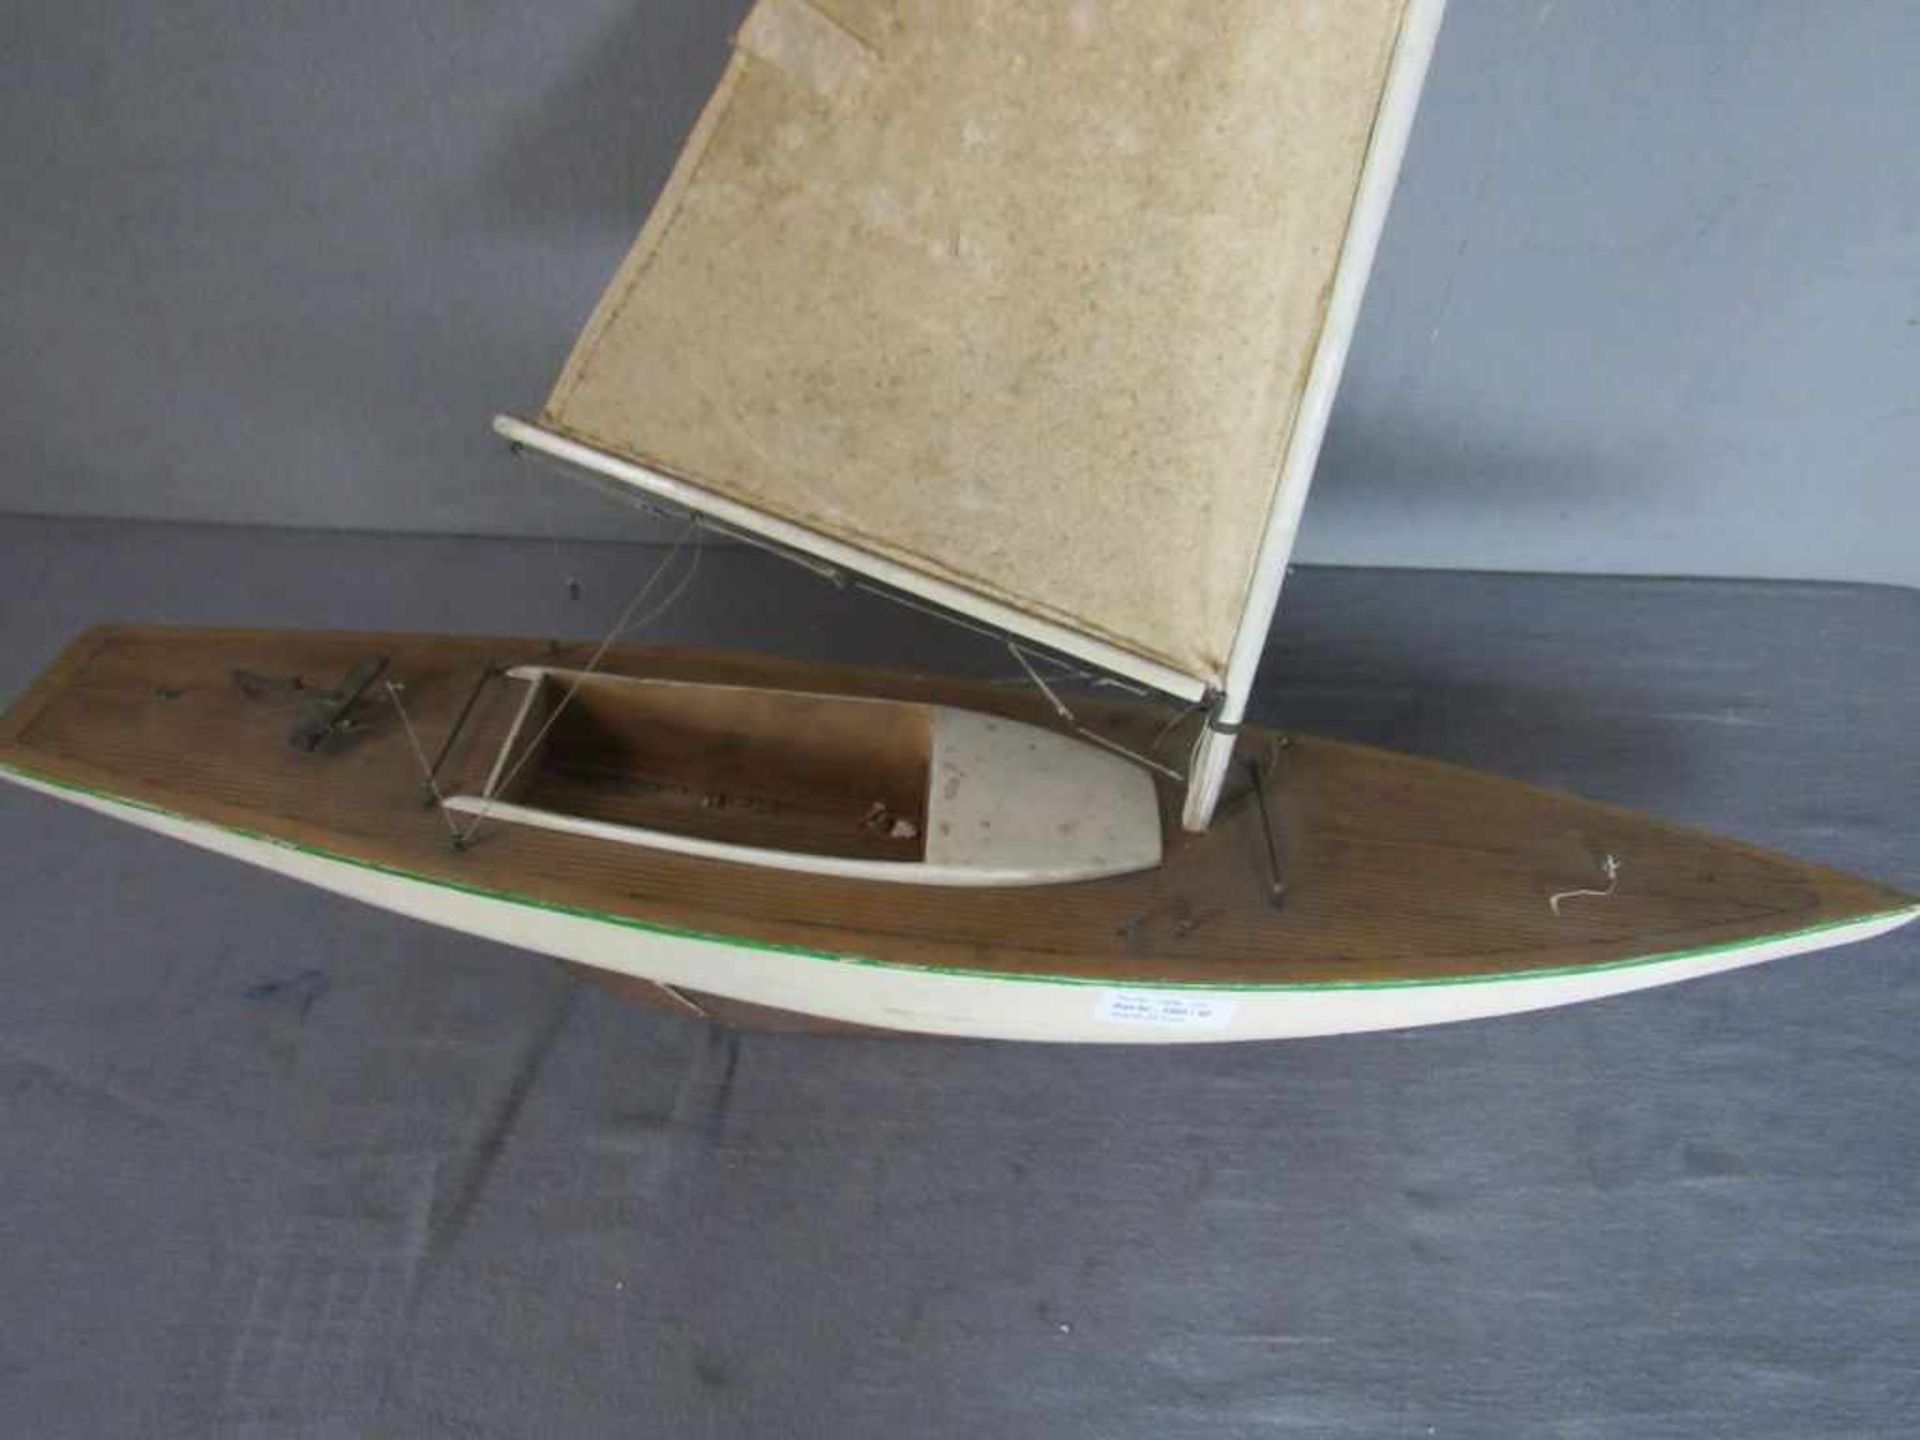 Spielzeugschiff Segelboot 77cm lang- - -20.00 % buyer's premium on the hammer price19.00 % VAT on - Image 2 of 2